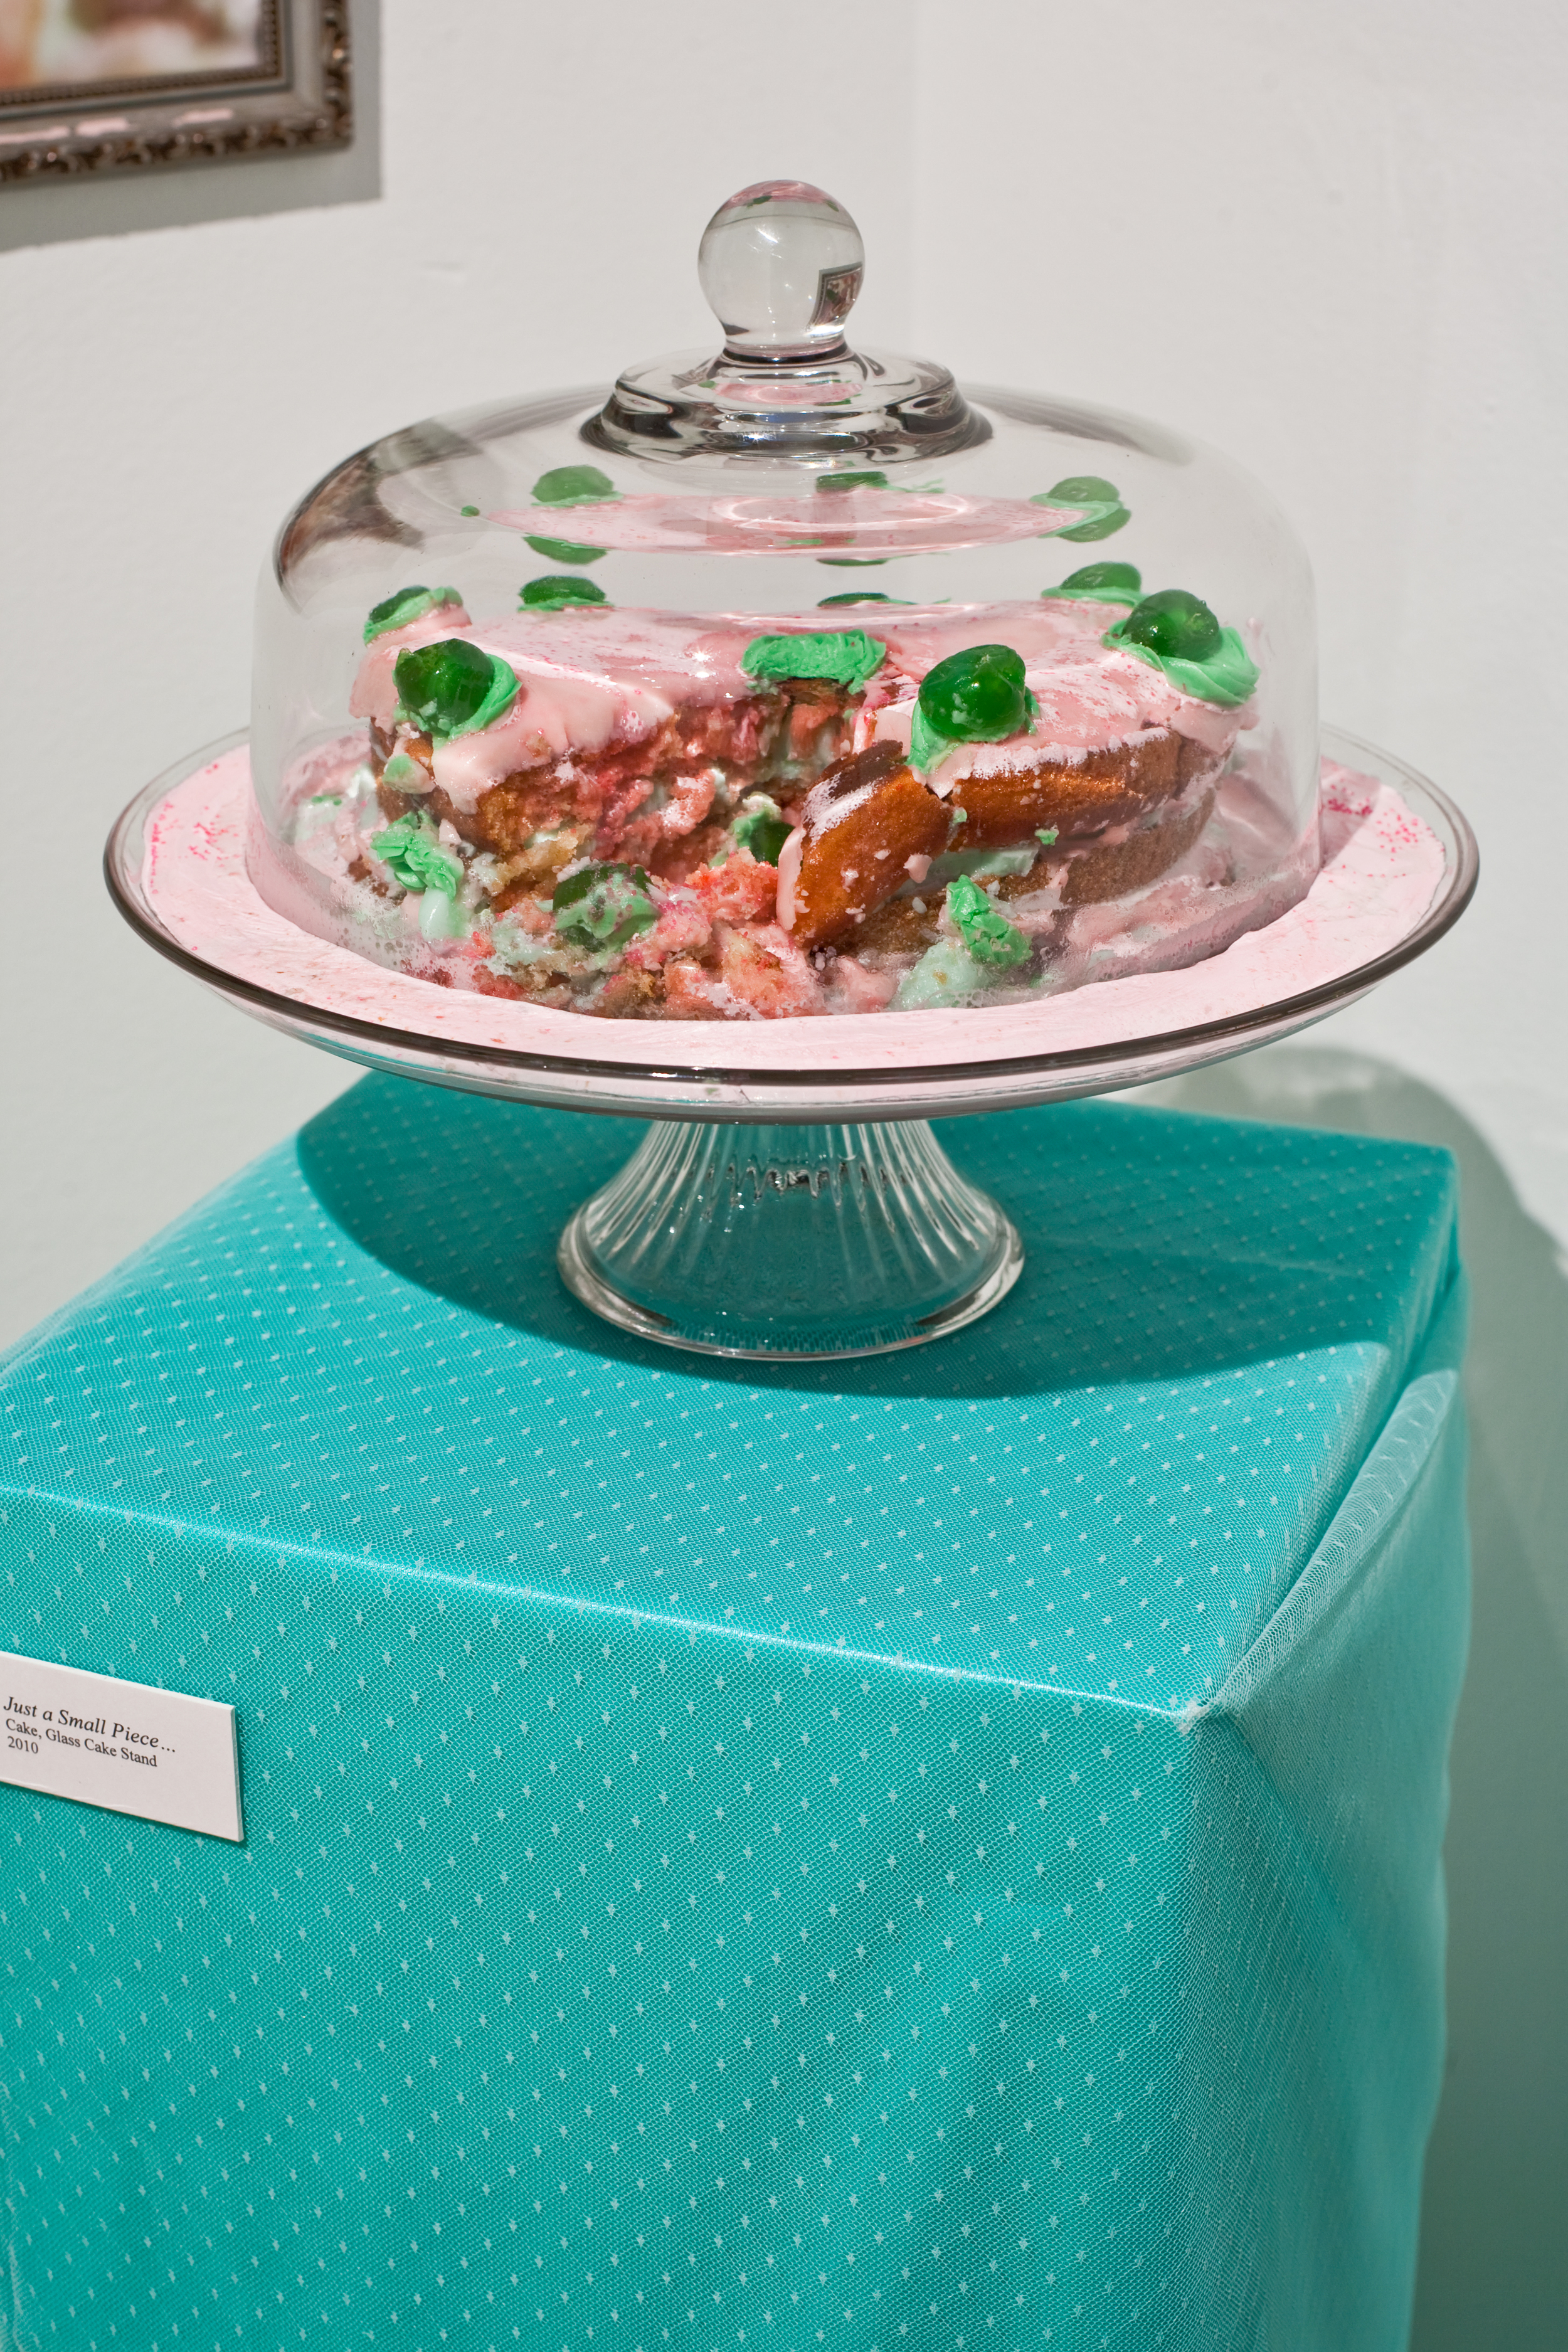   Just a Small Piece…   Cake, Glass Cake Stand  2010  Photo:  Daniel Shea &nbsp; 